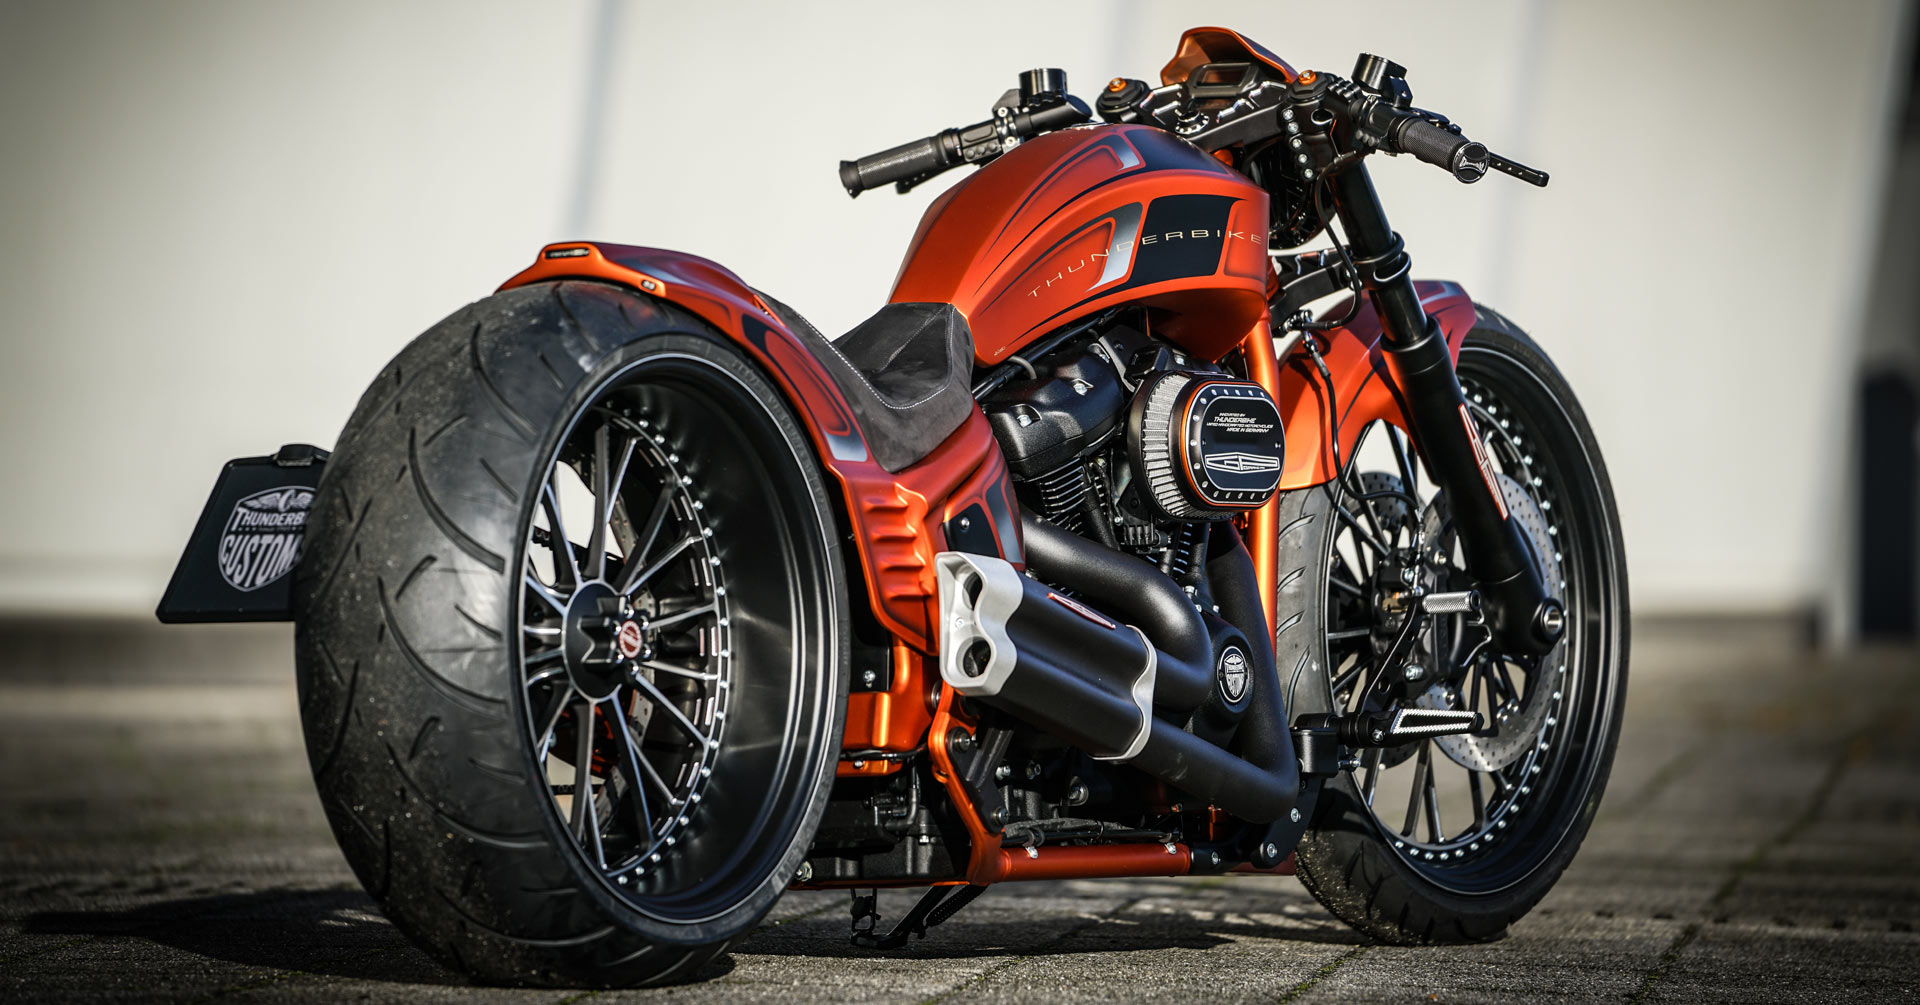 Customized HarleyDavidson Softail Breakout motorcycles by Thunderbike